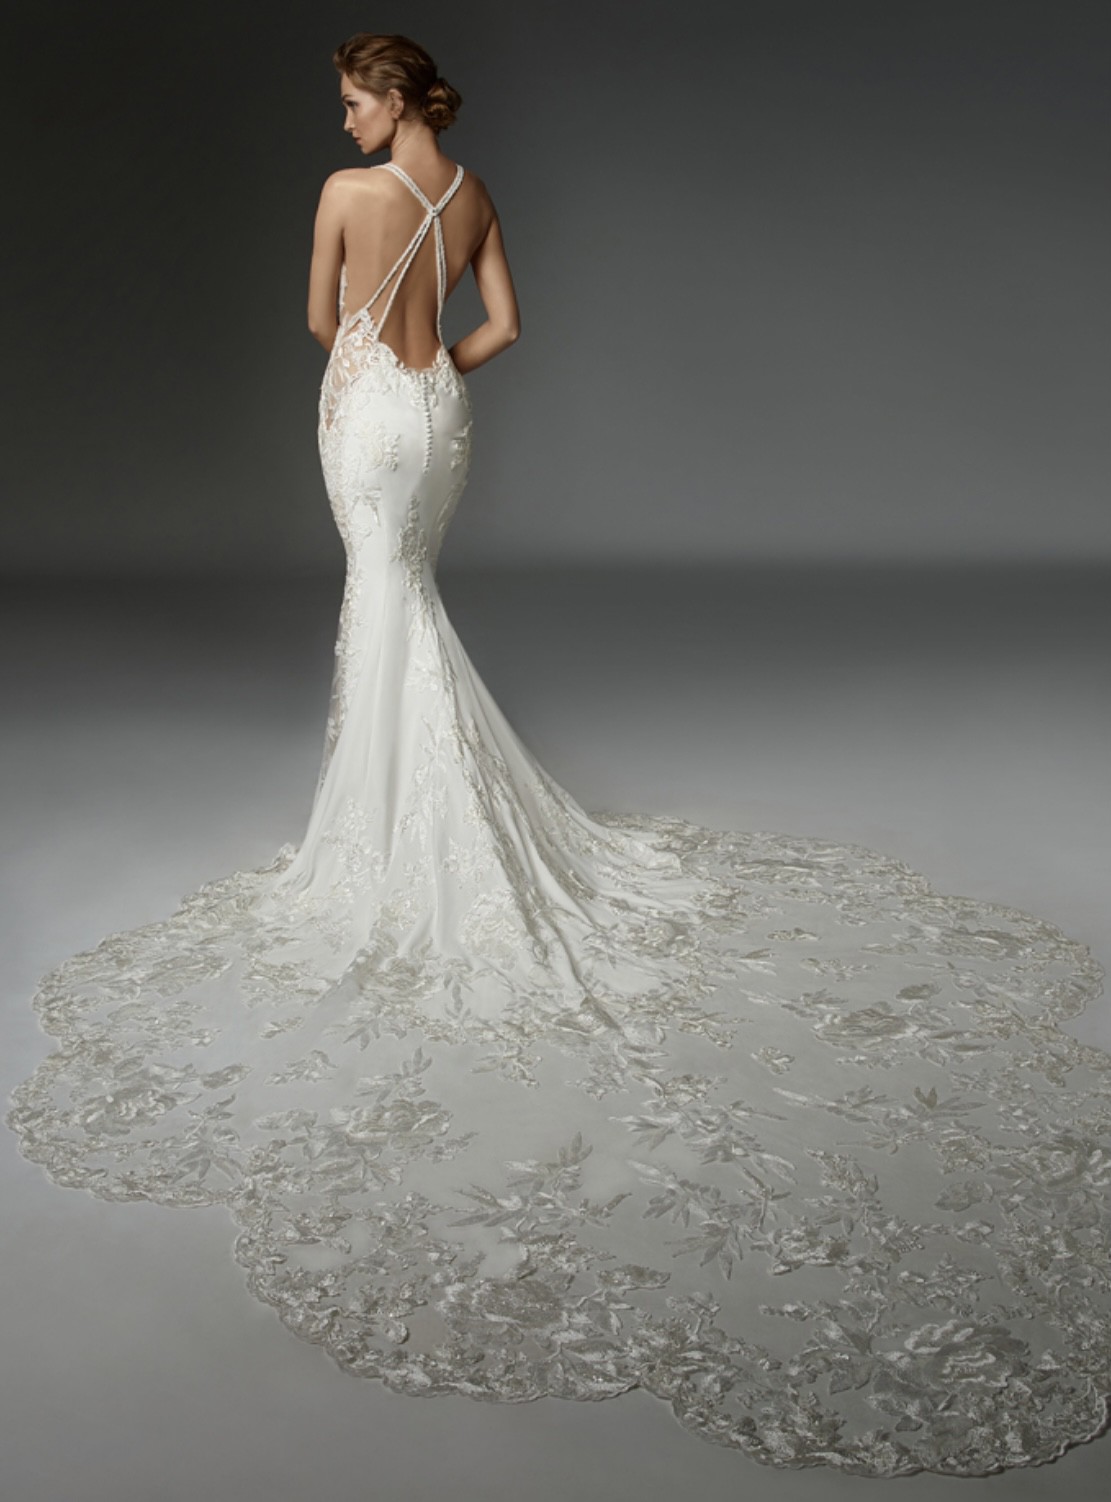 Elysee Gemma New Wedding Dress Save 41% - Stillwhite